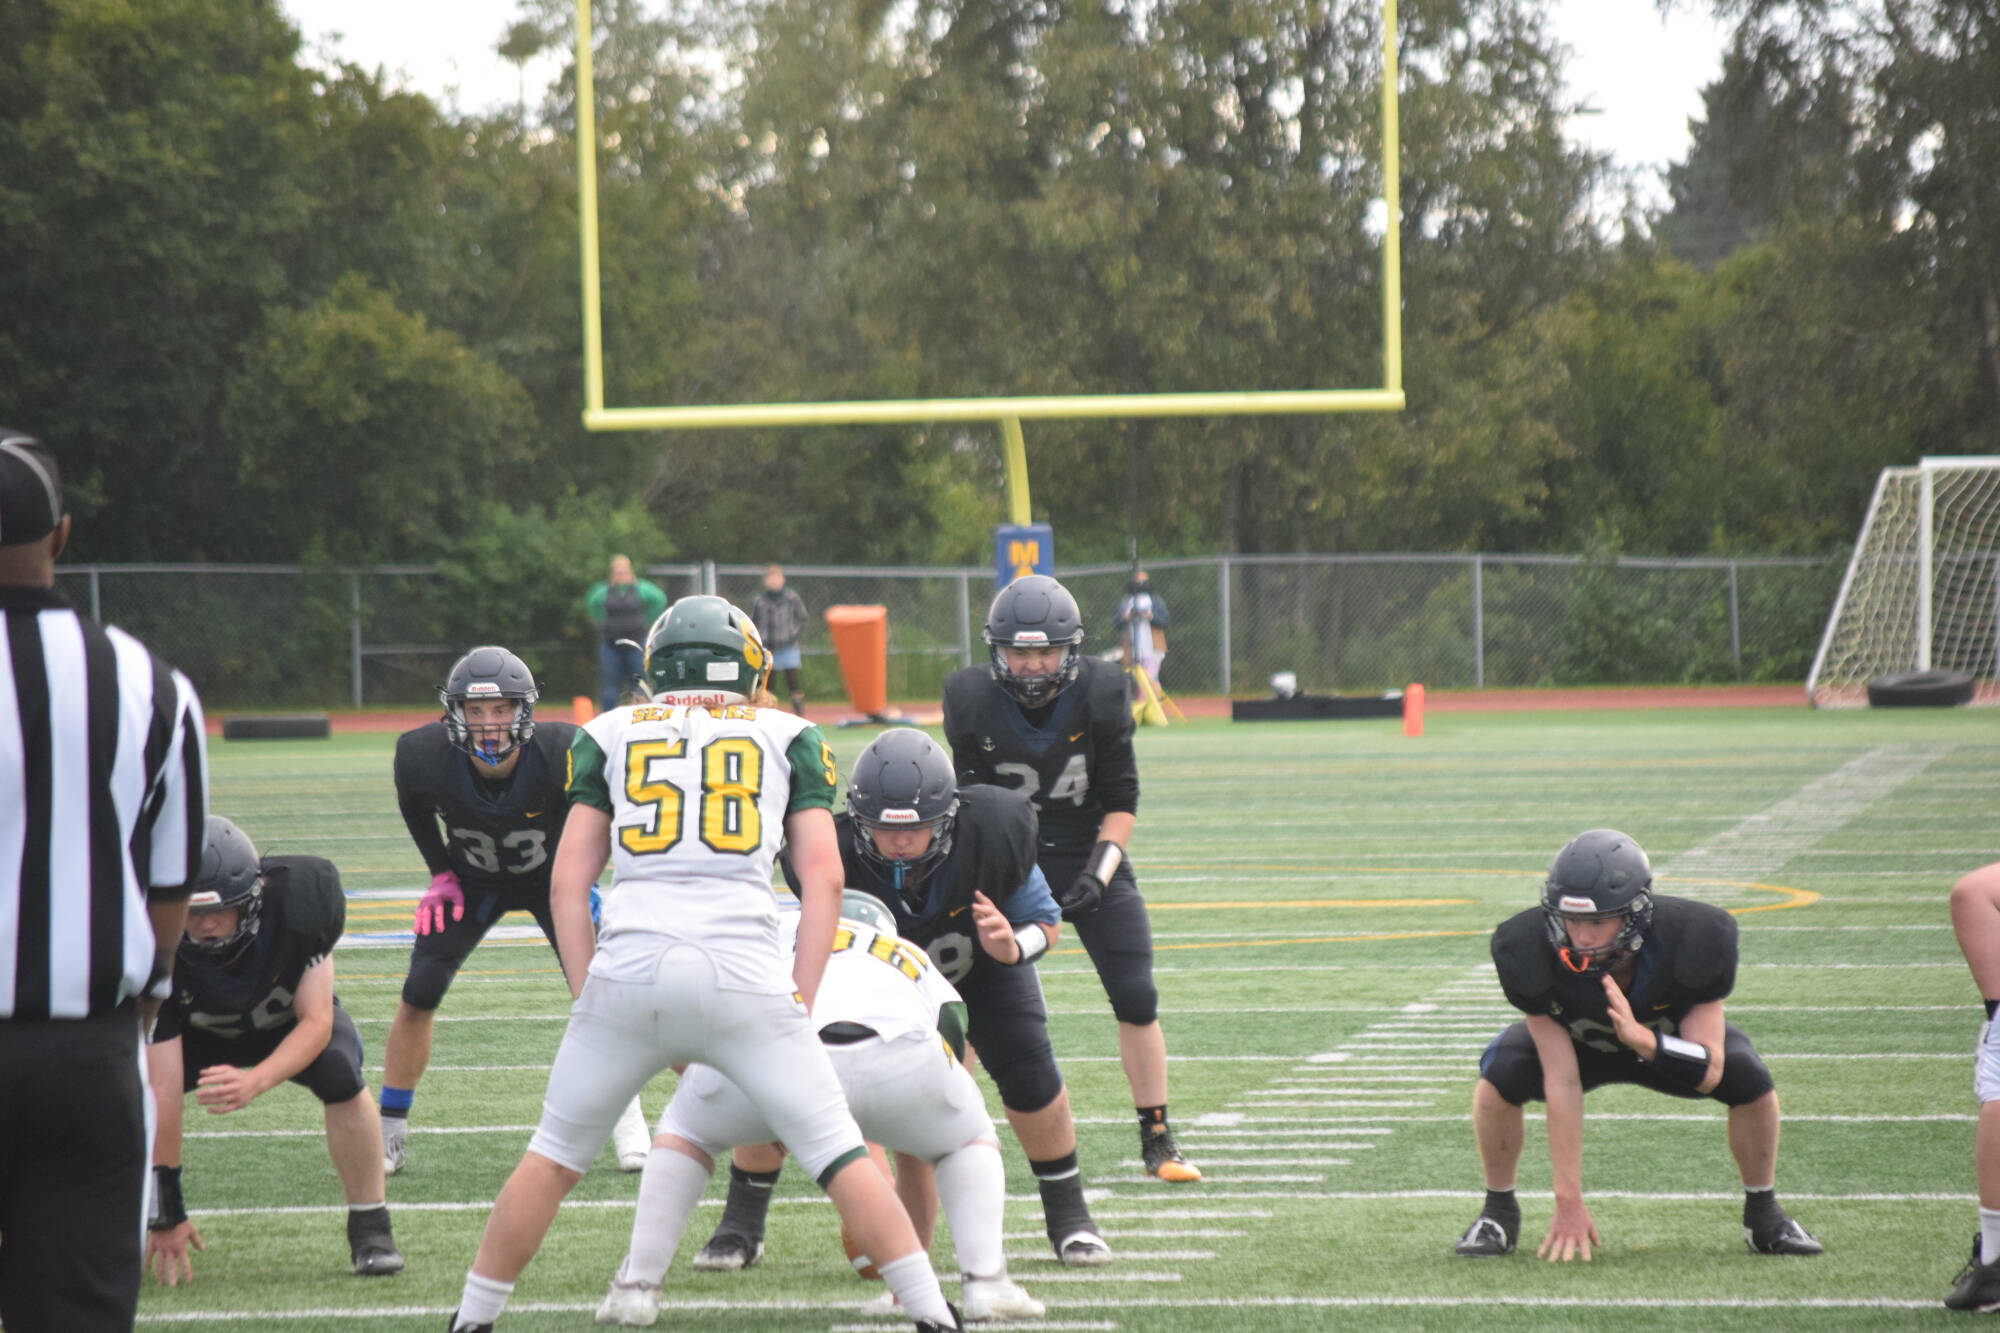 Sophomore Preston Stanislaw leads the offensive line on Friday, Aug. 26 at Homer High School Field in Homer, Alaska. (Photo by Charlie Menke/Homer News)